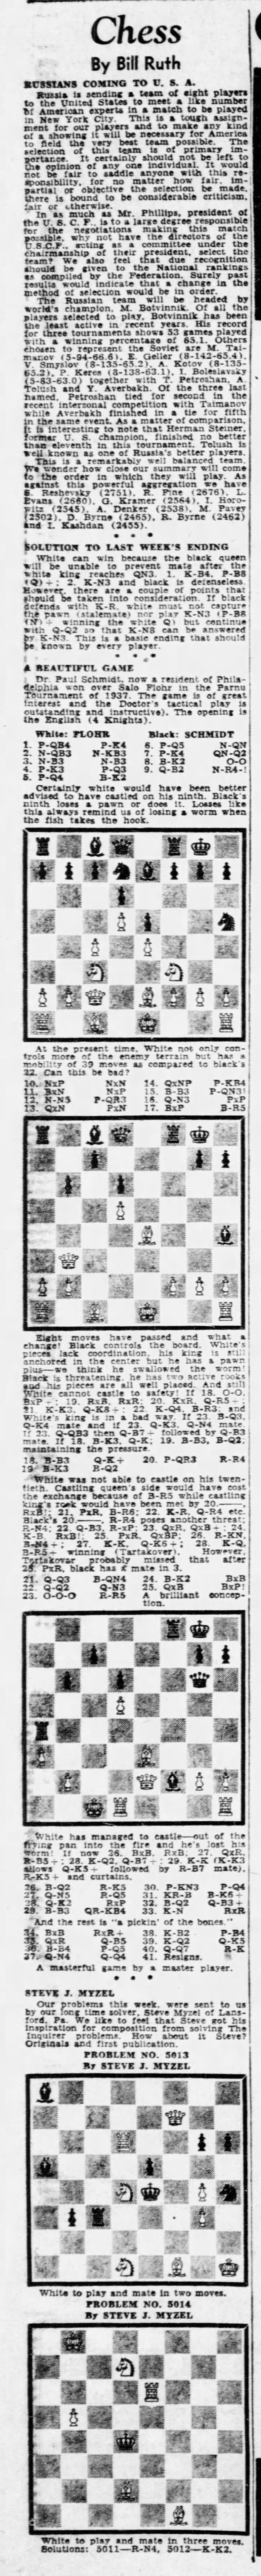 Chess by Bill Ruth